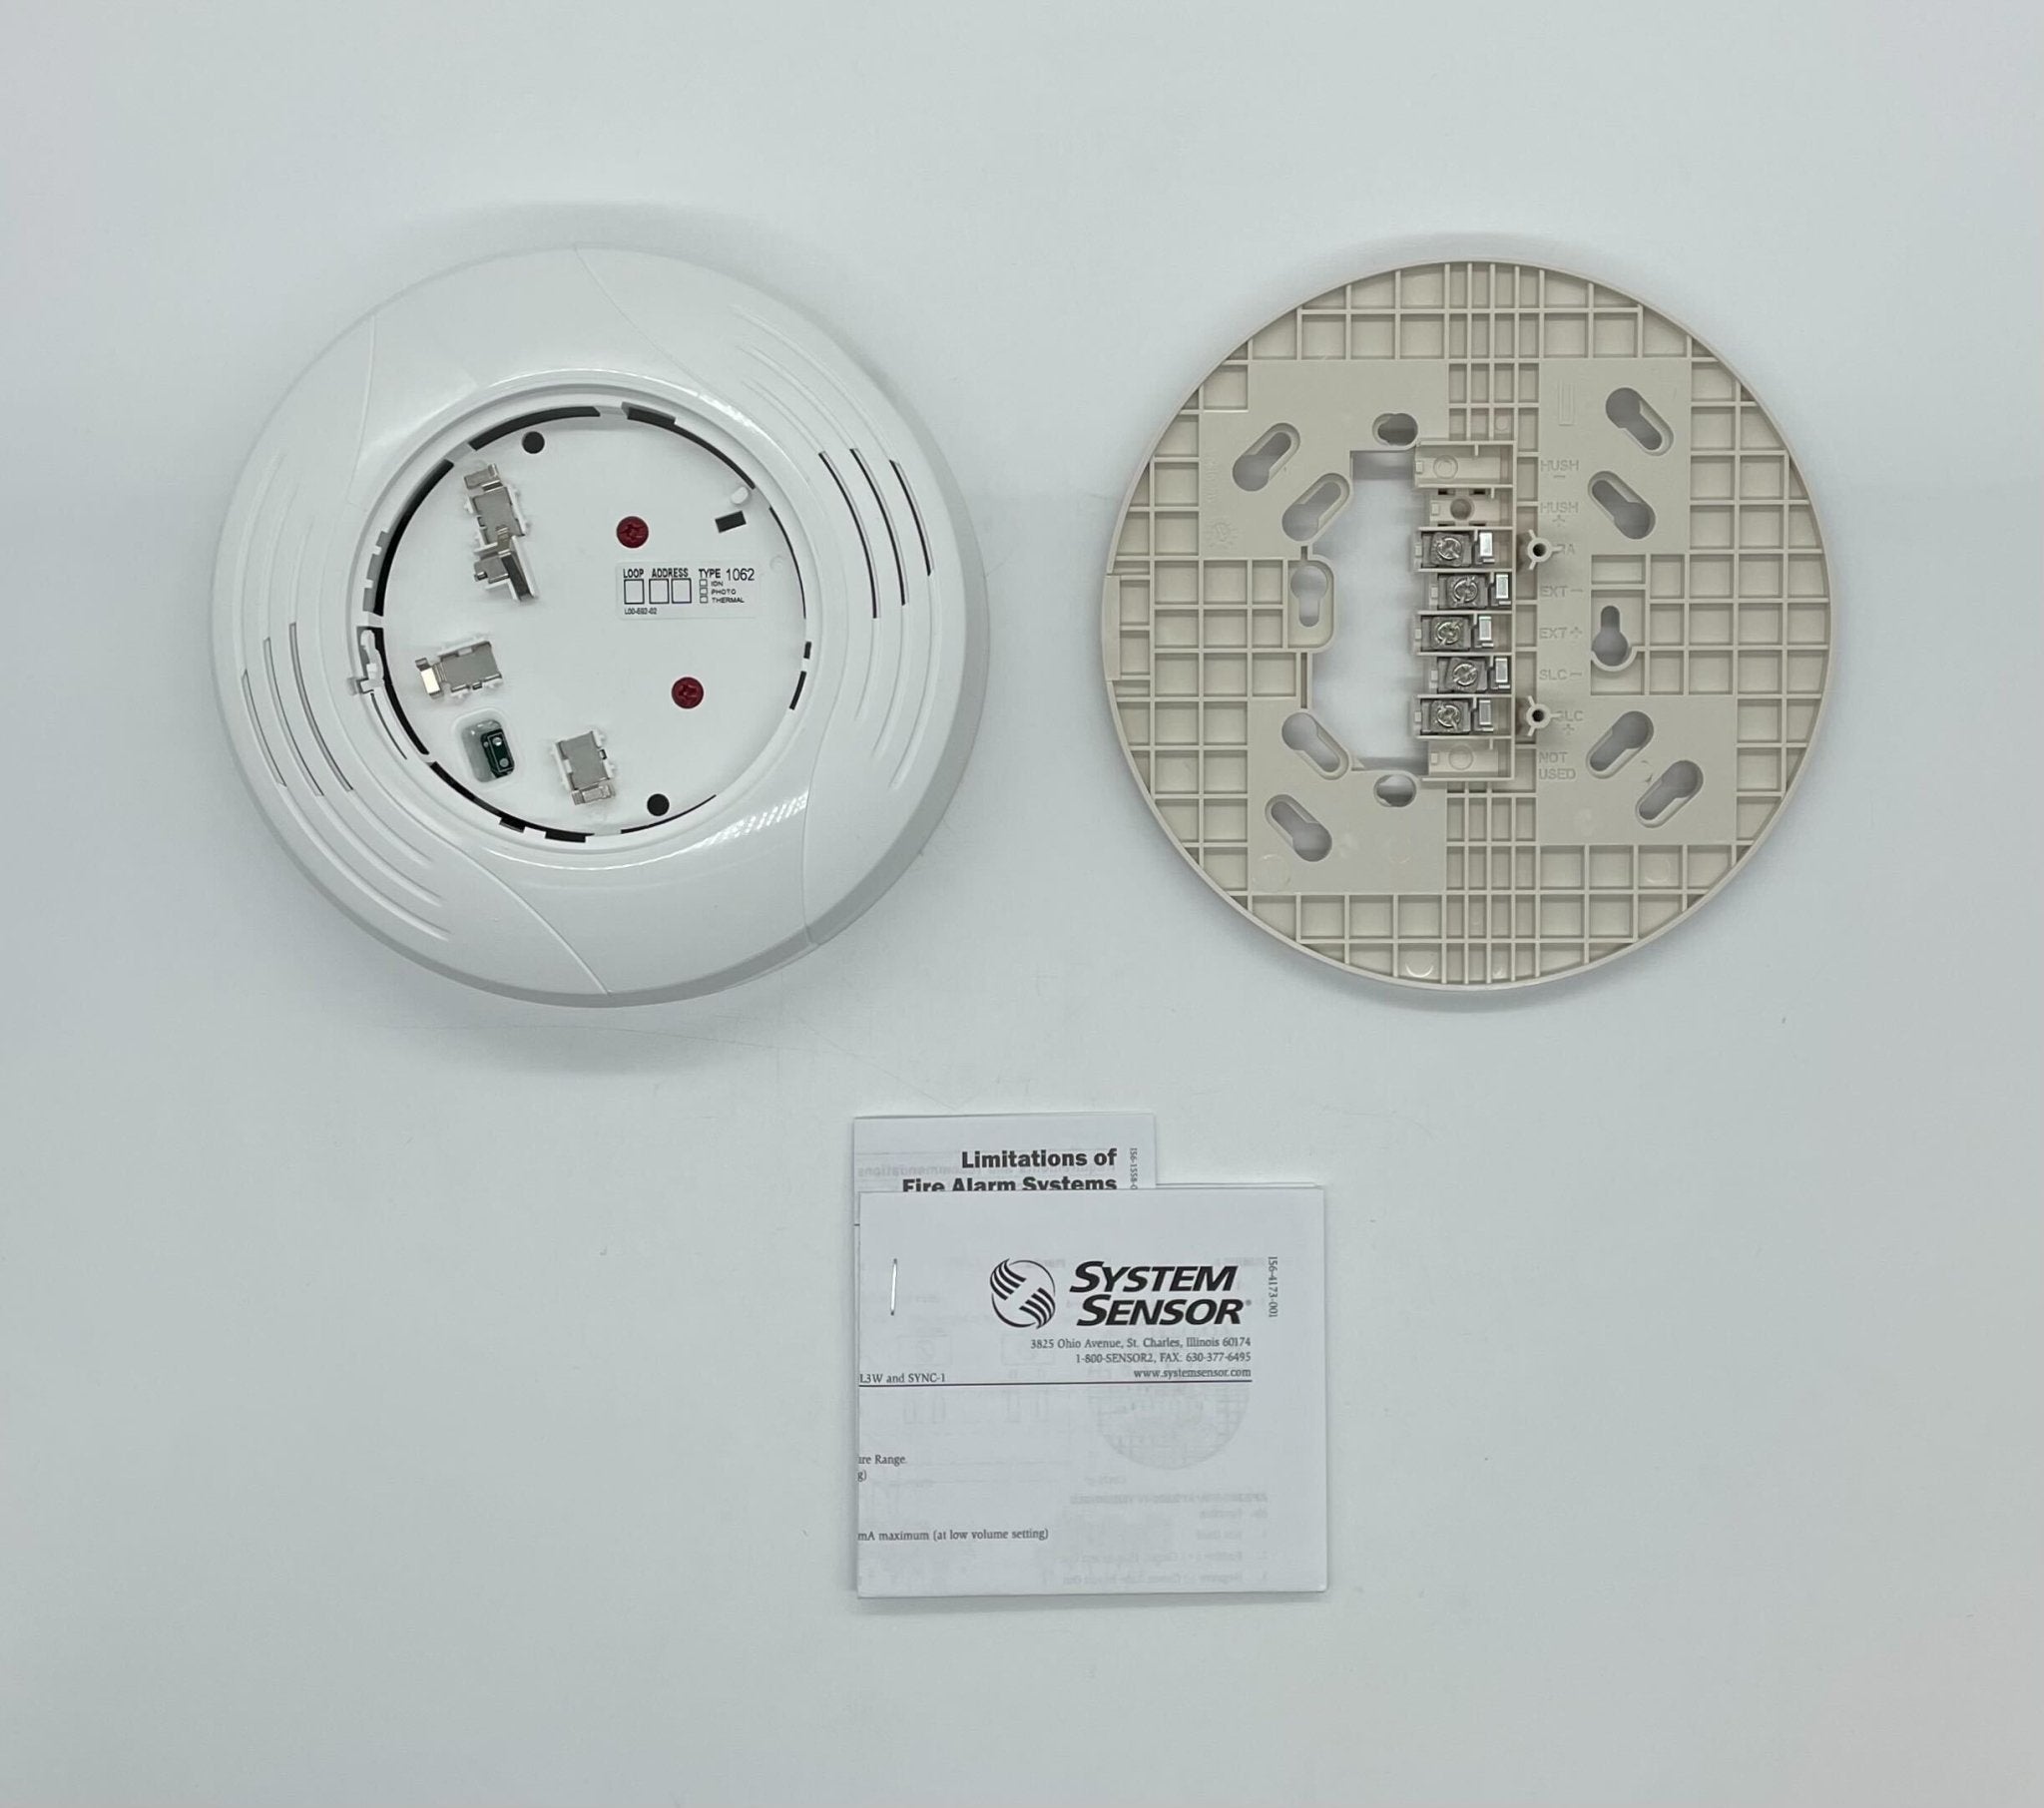 Mircom APB200-WH - The Fire Alarm Supplier